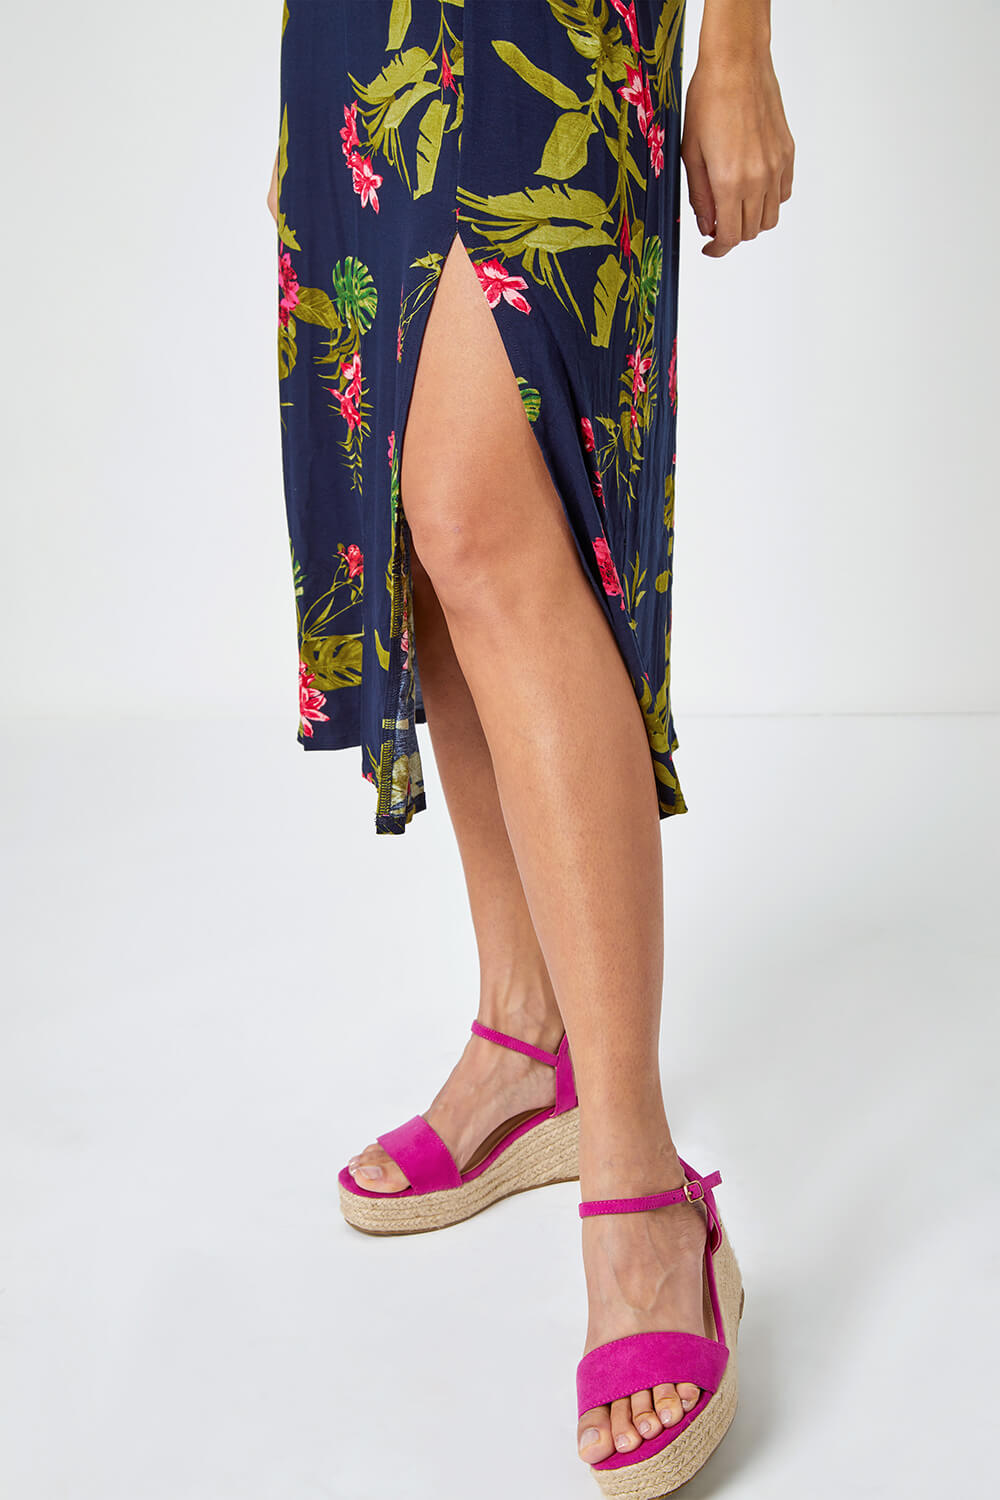 PINK Tropical Print Stretch Midi Dress, Image 5 of 5